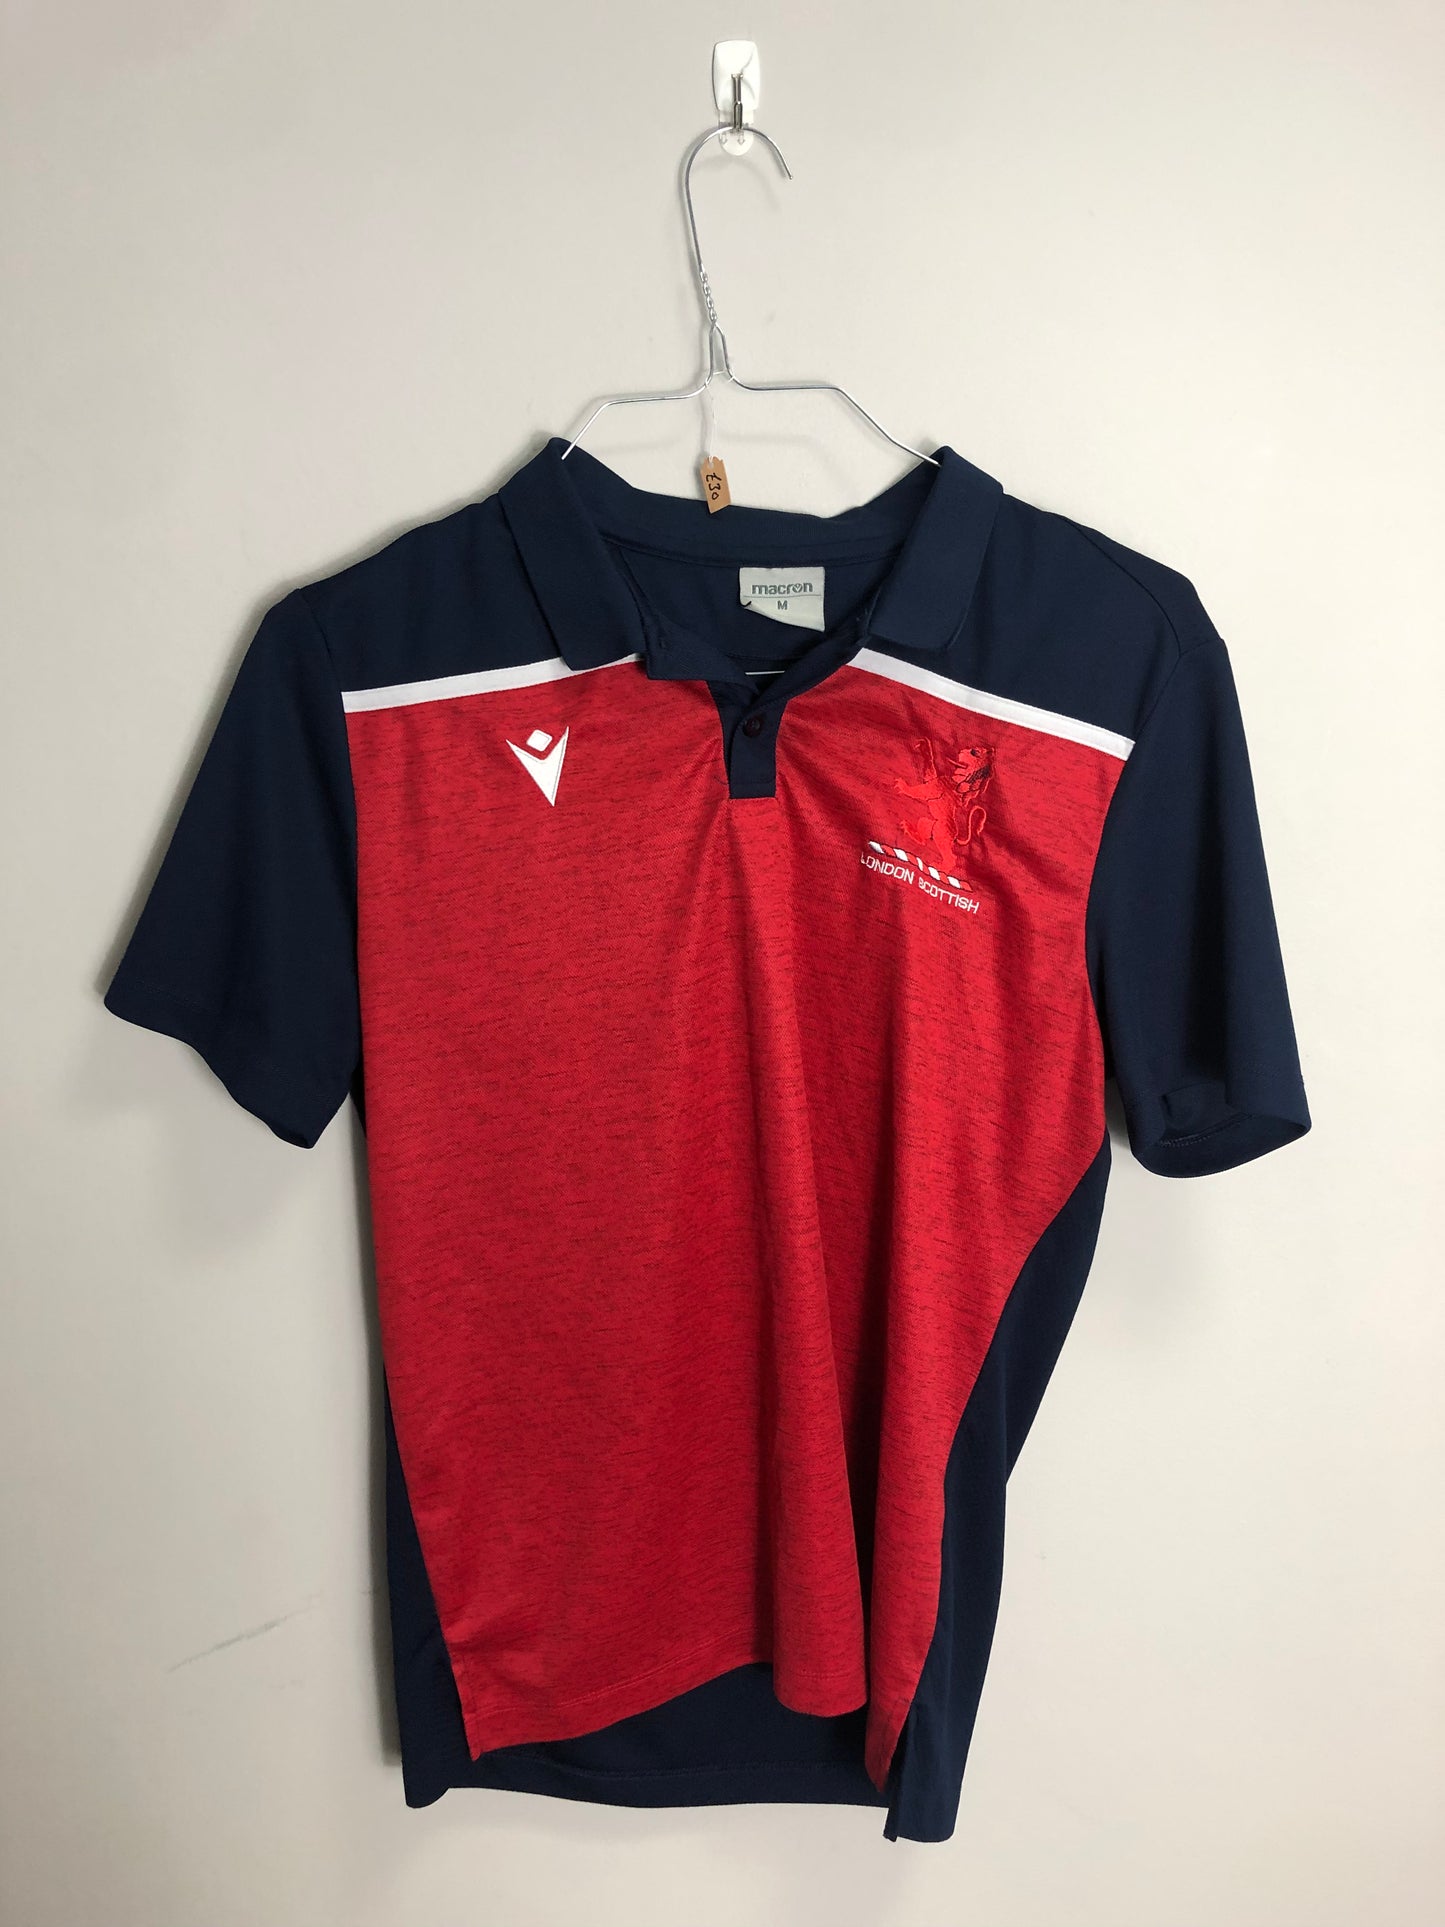 London Scottish Rugby Polo Shirt - Medium - 39” Chest